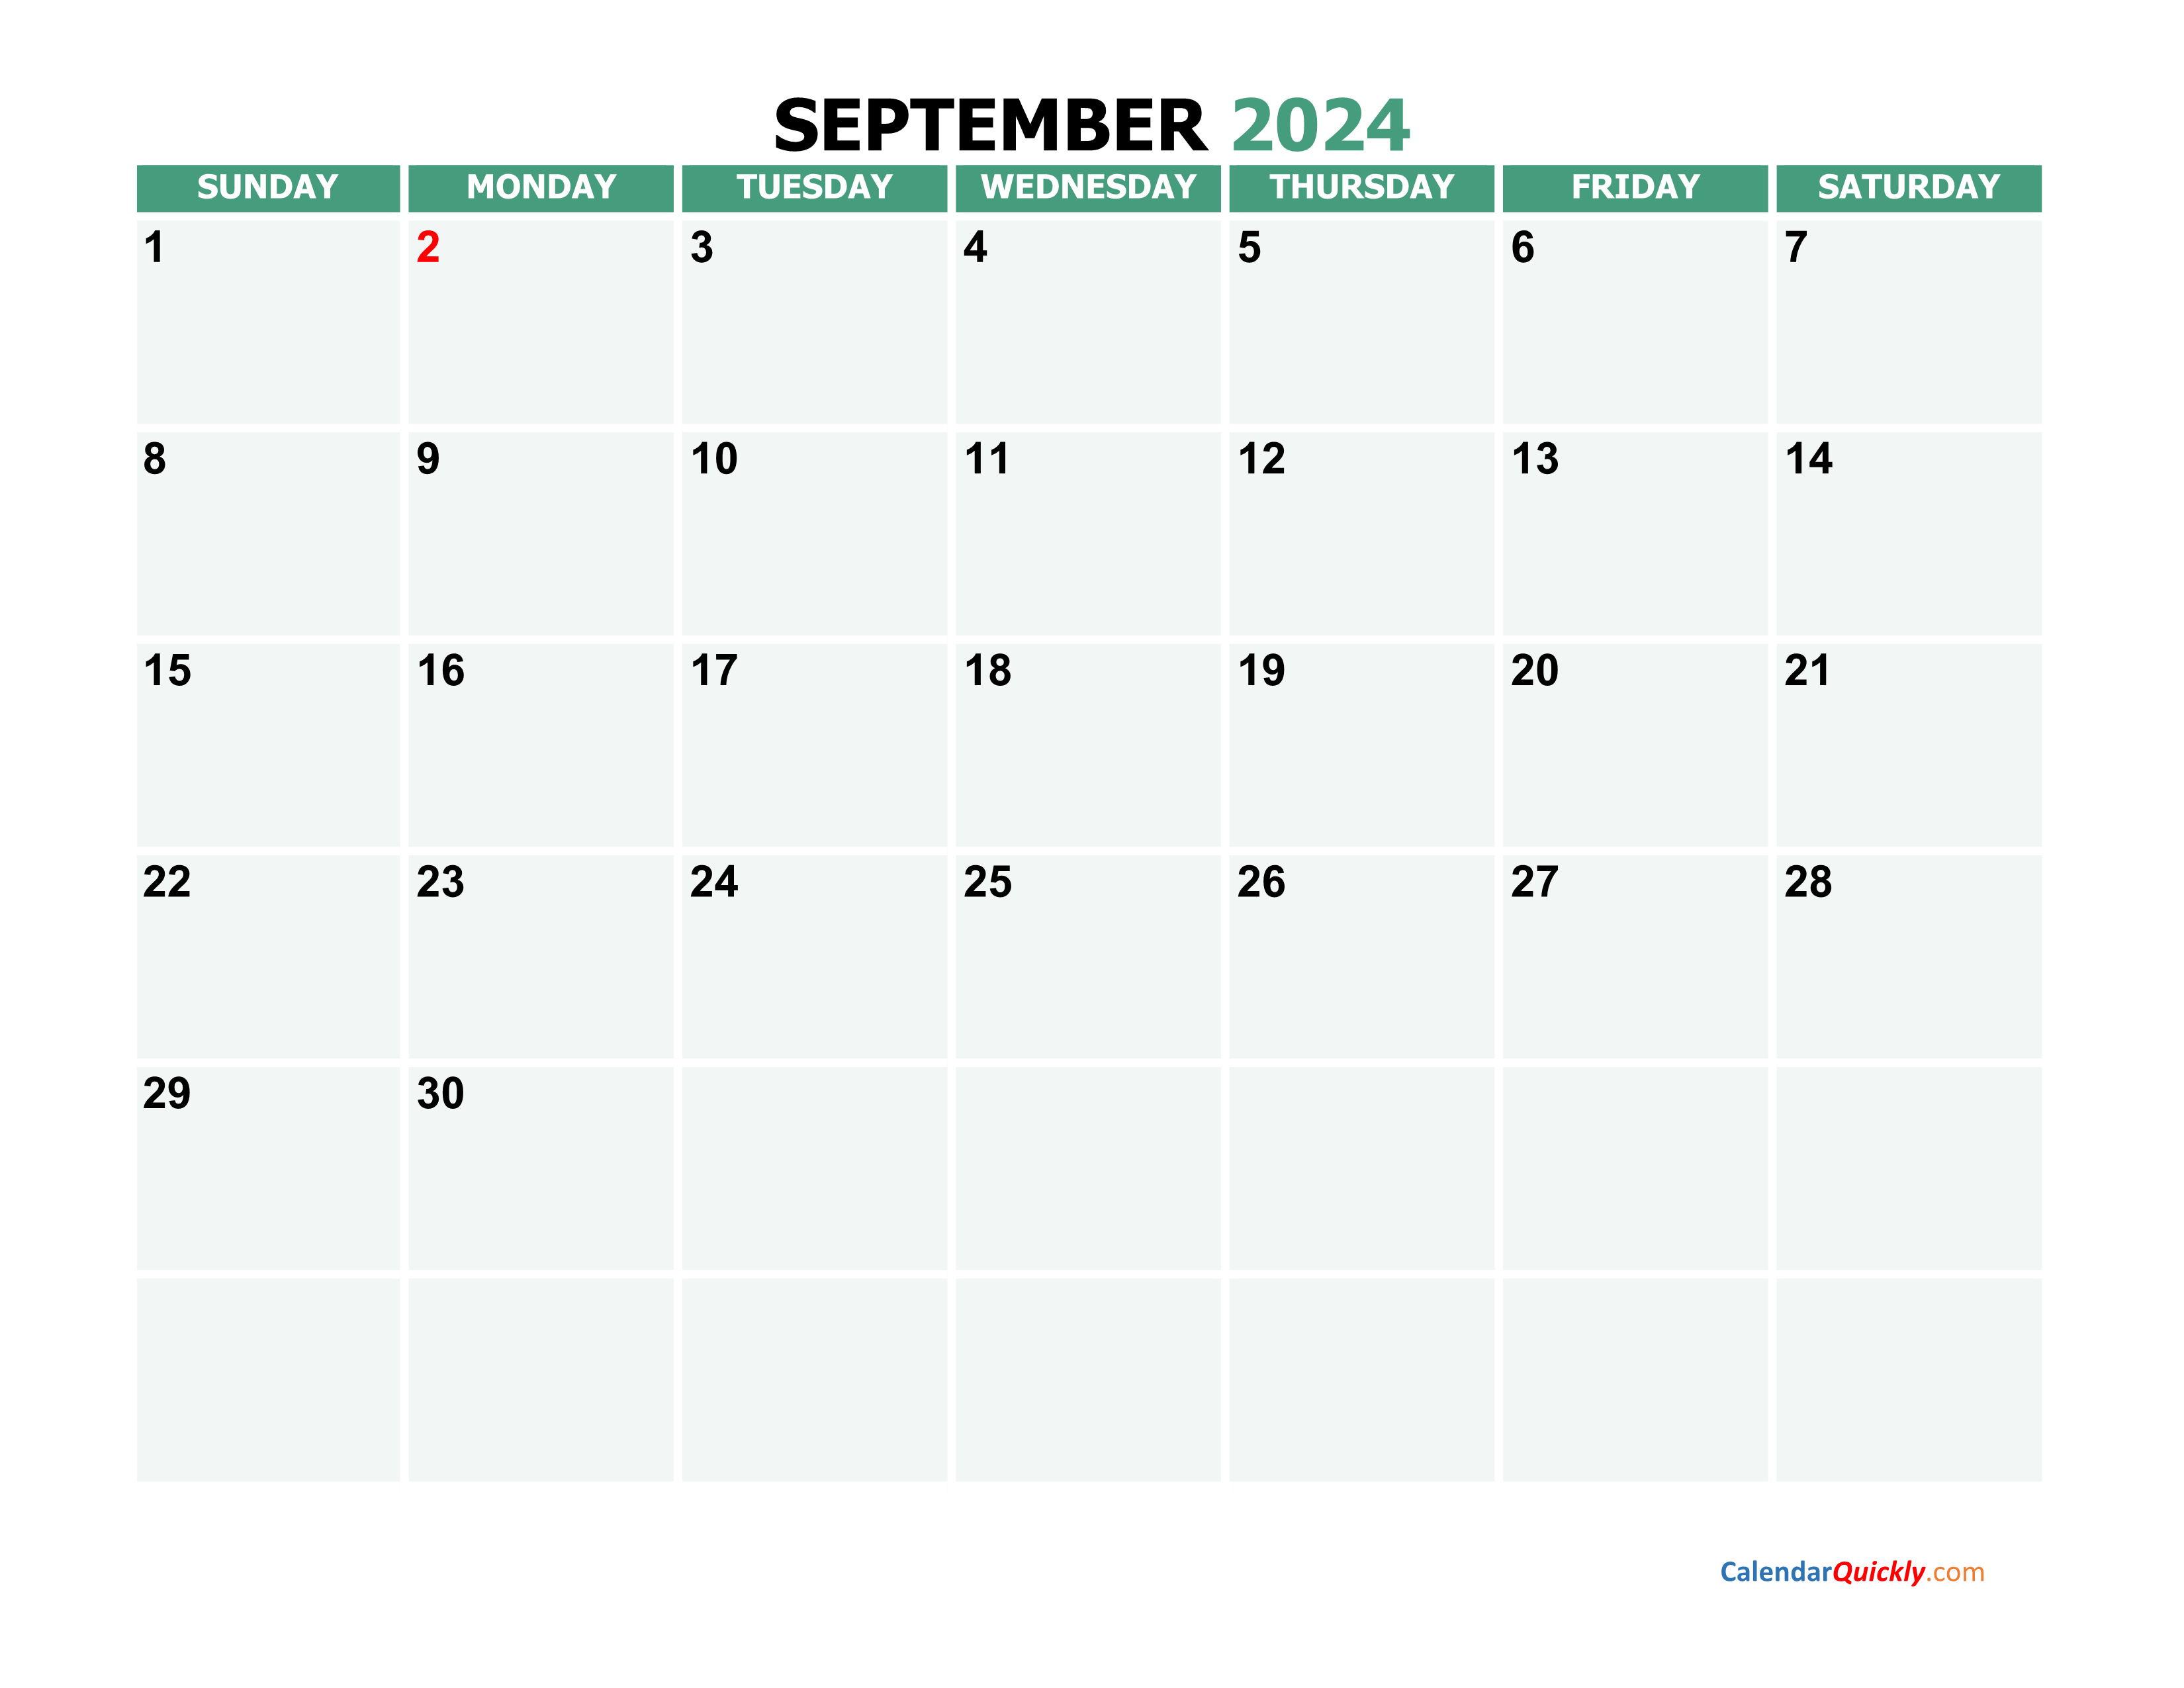 Calendar September 2024 Printable Free Calendar 2024 All Holidays - Free Printable 5 Day Monthly Calendar September 2024 June 2024